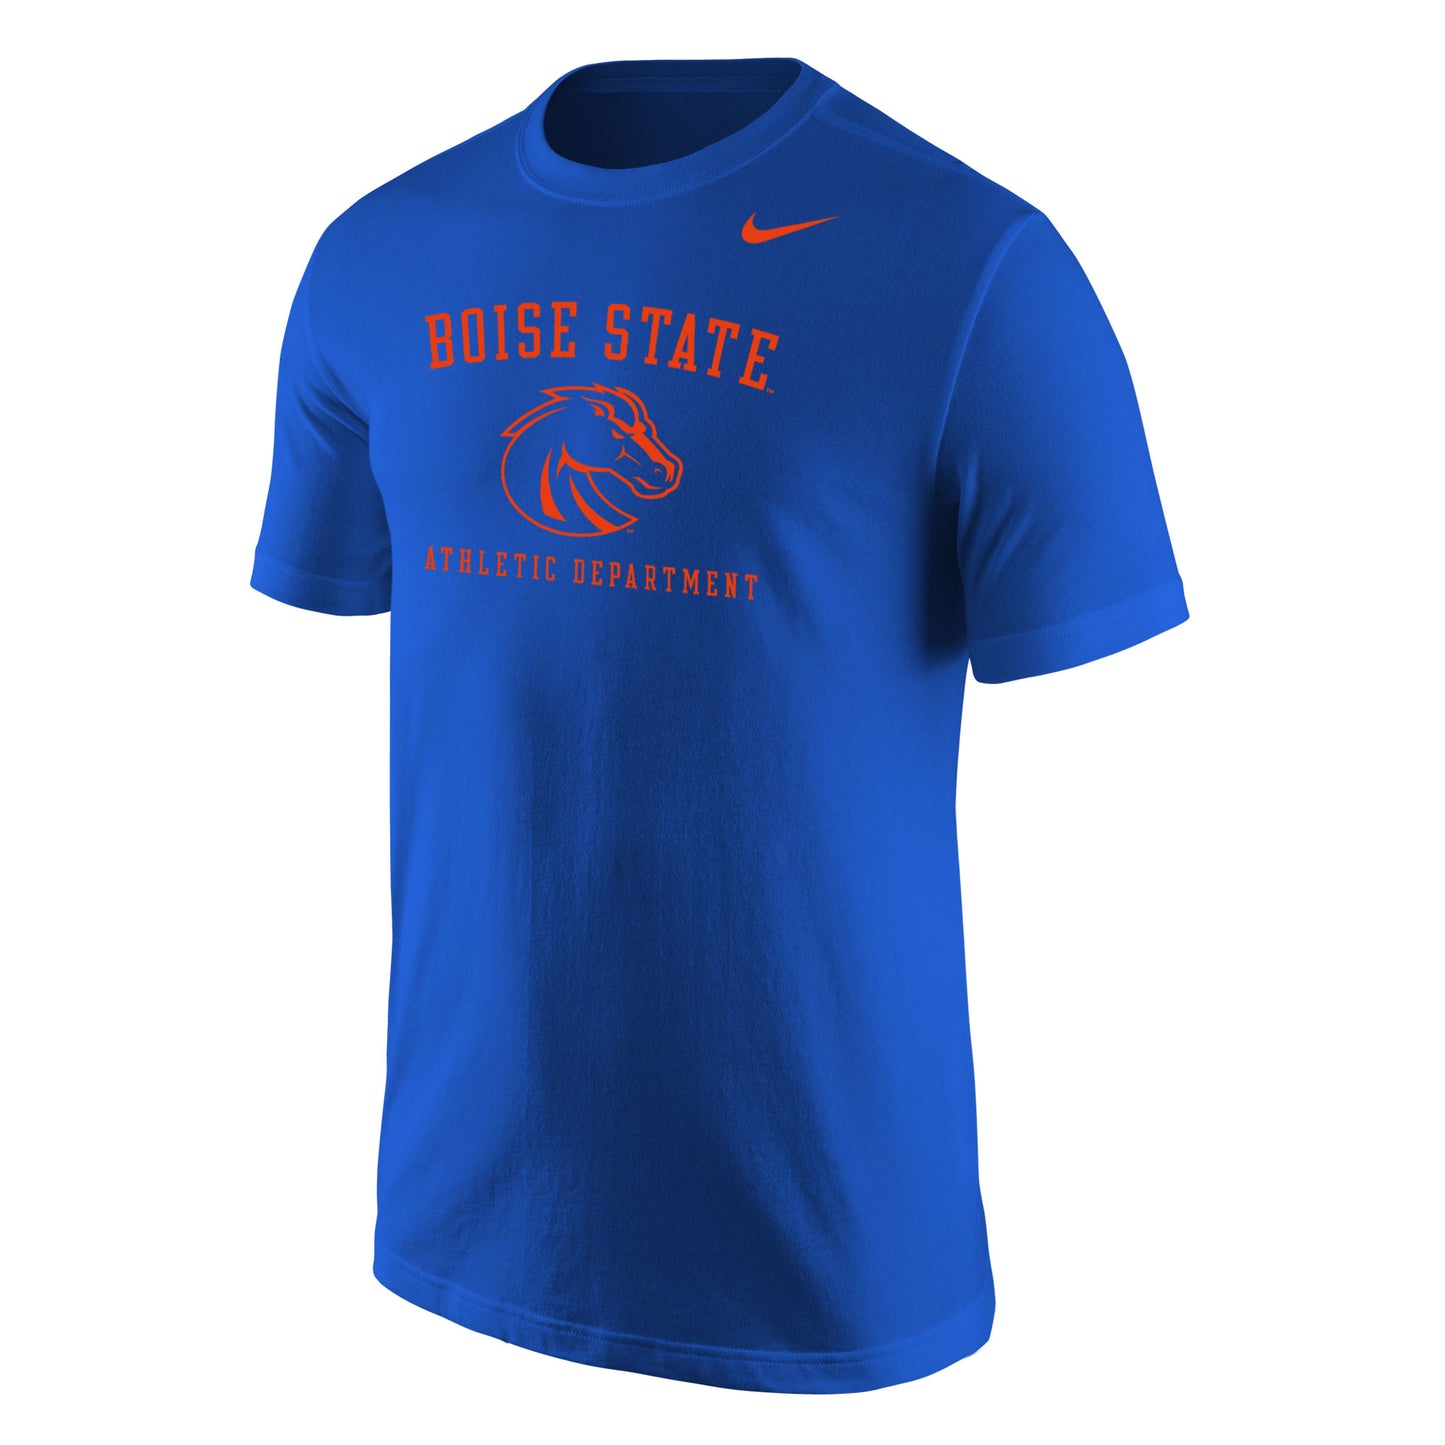 Boise State Broncos Nike Men's Athletic Department T-Shirt (Blue)